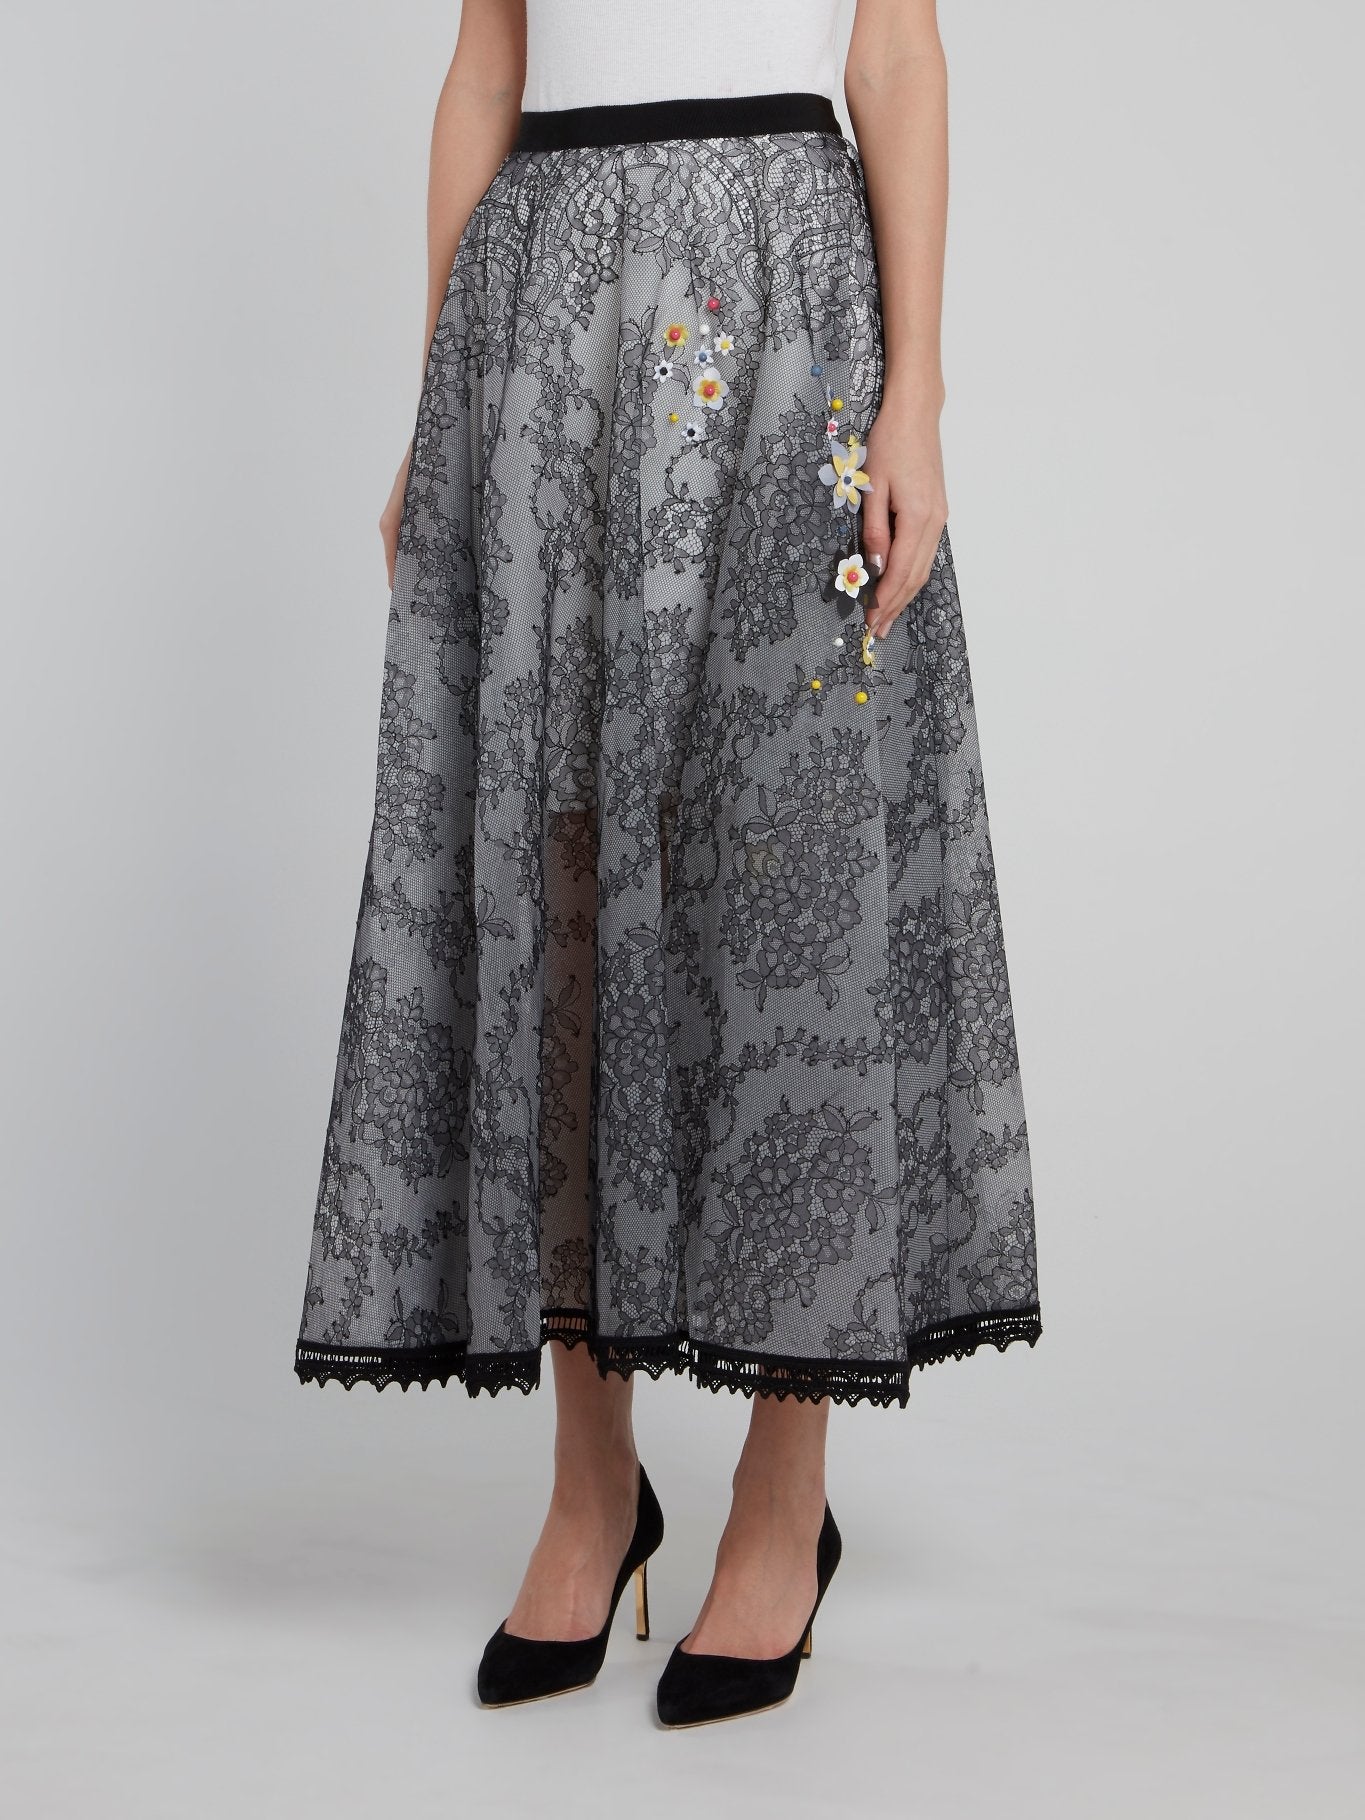 Floral Embellished Lace Midi Skirt